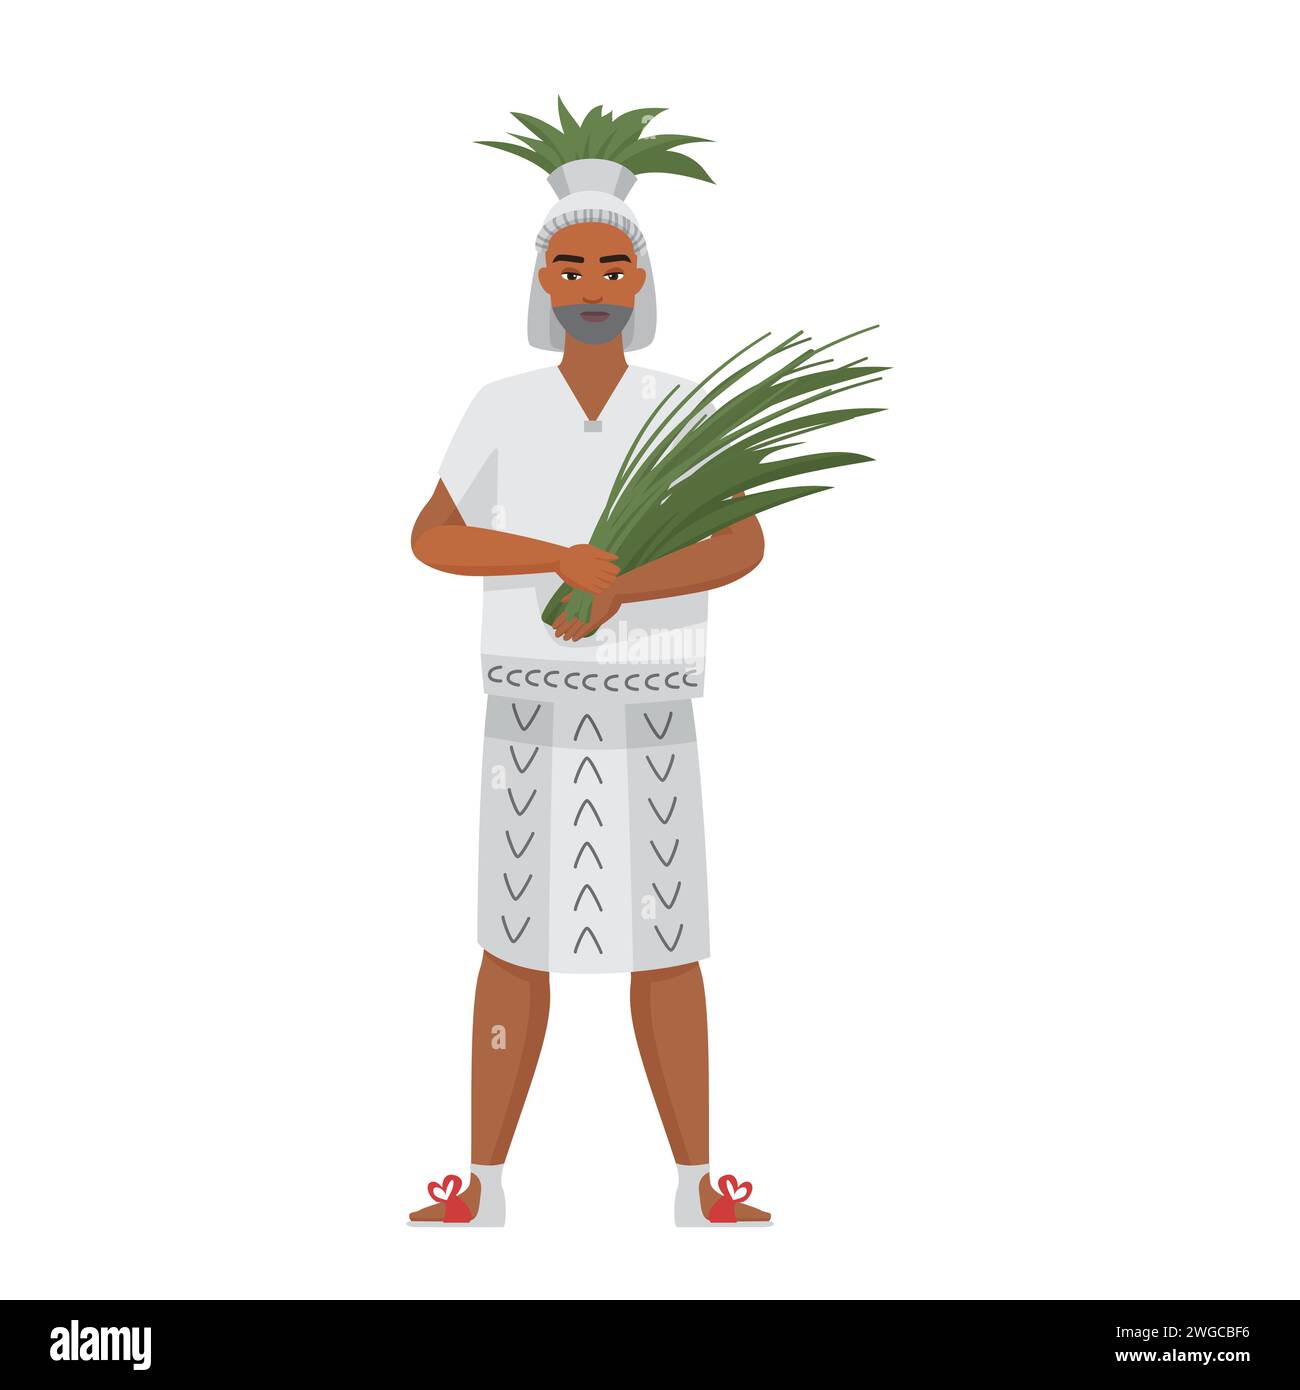 Aztec peasant standing, man holding bunch of grass in hands vector illustration Stock Vector